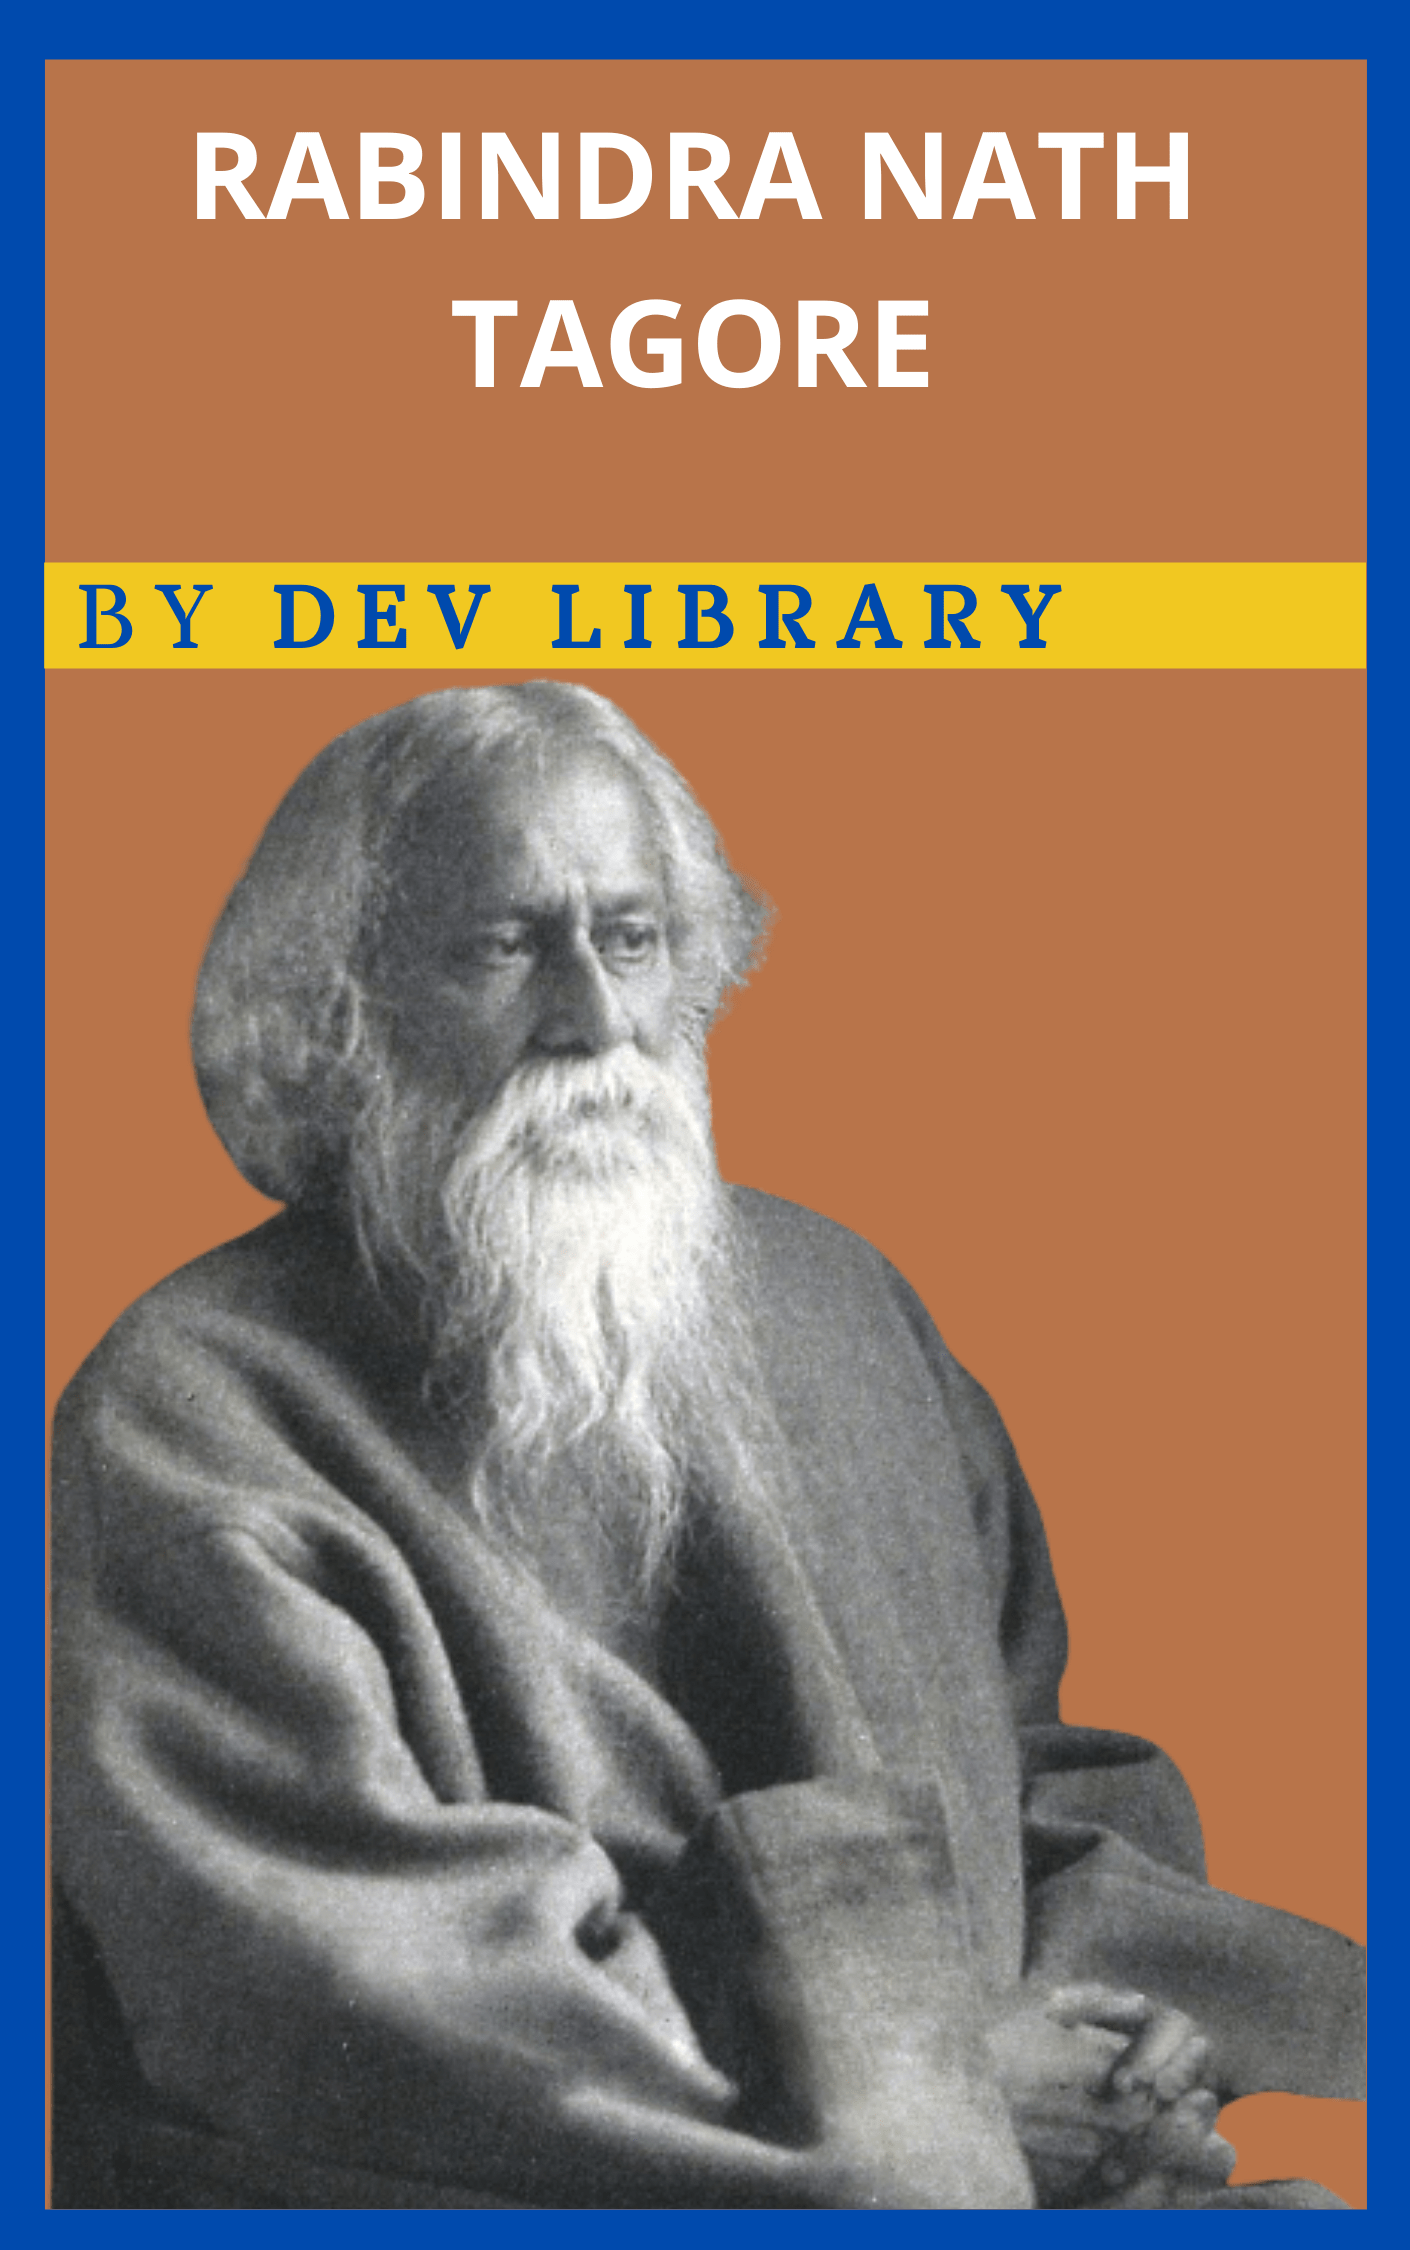 biography of rabindranath tagore in english pdf